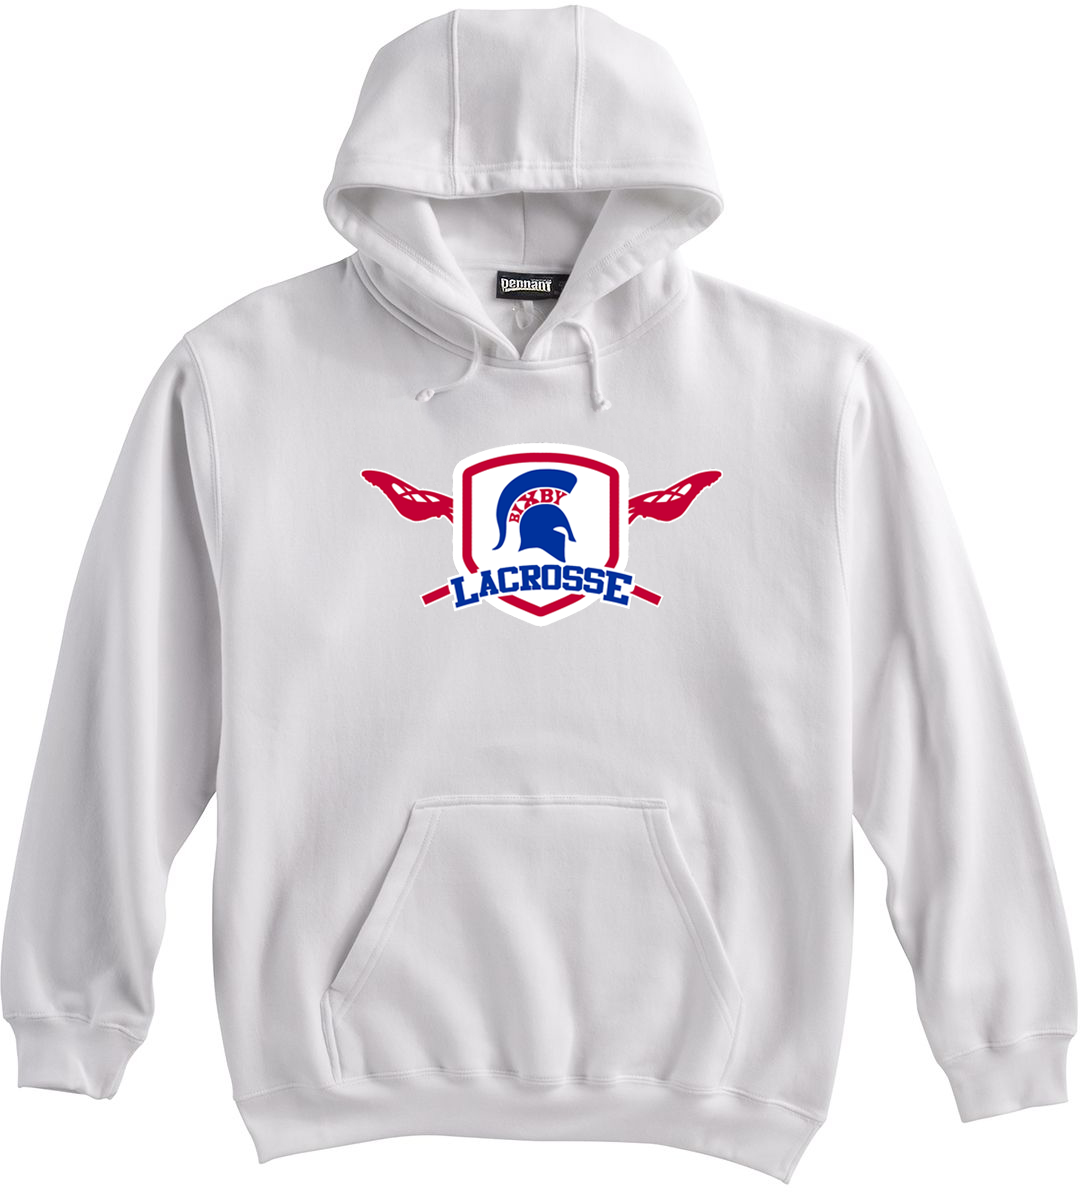 Bixby Lacrosse White Sweatshirt